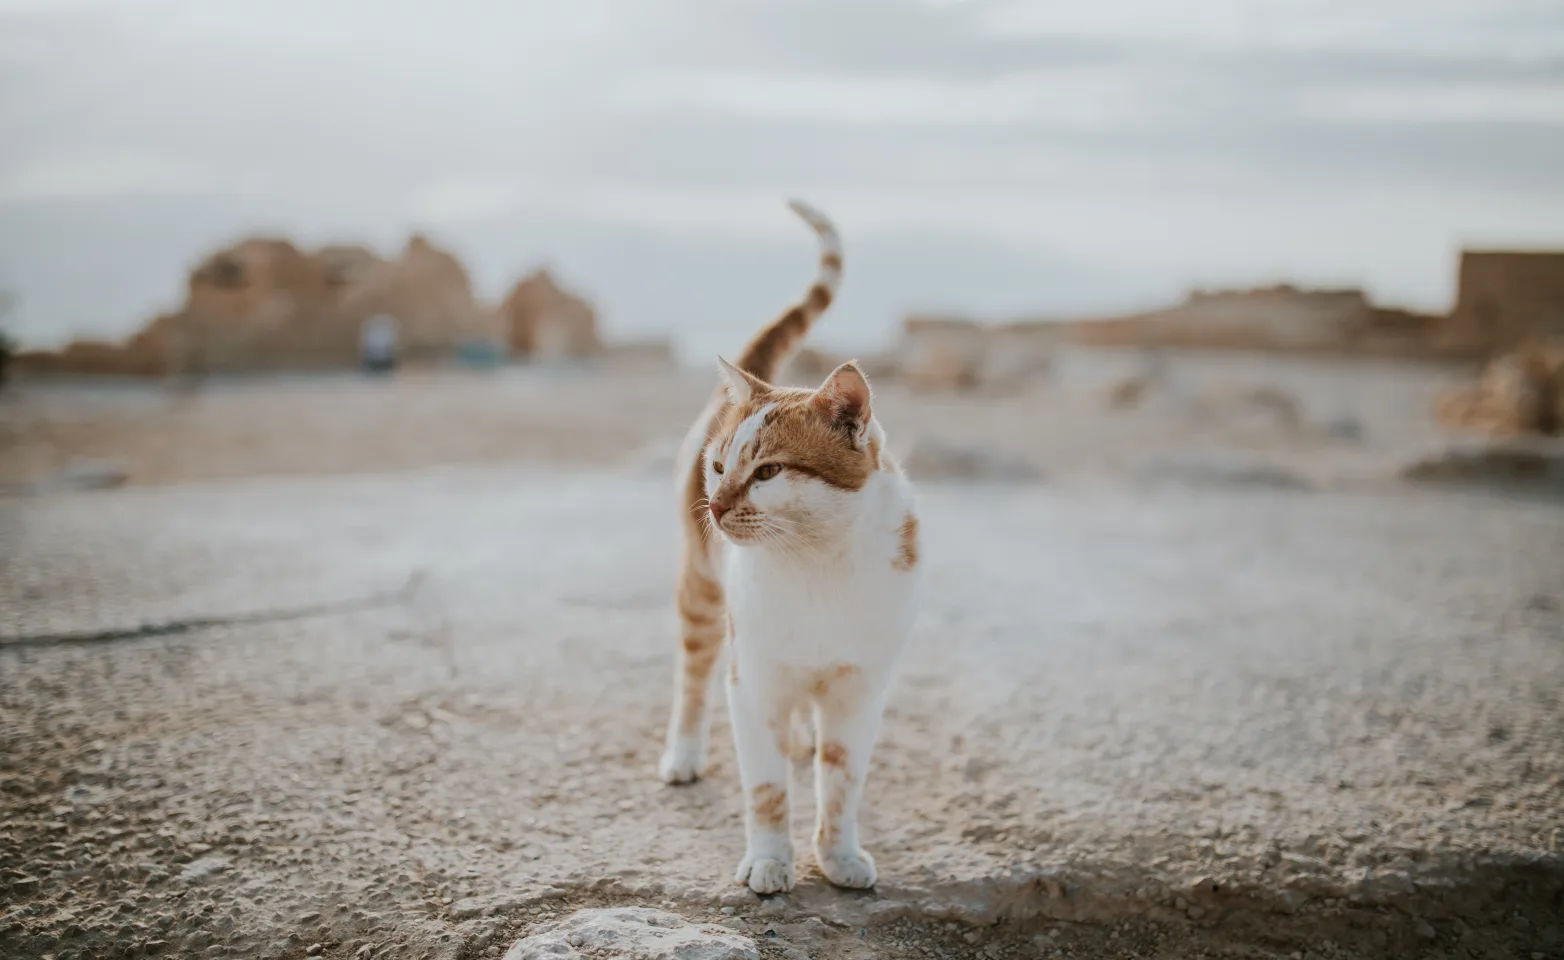 Cat standing alone in the desert. 